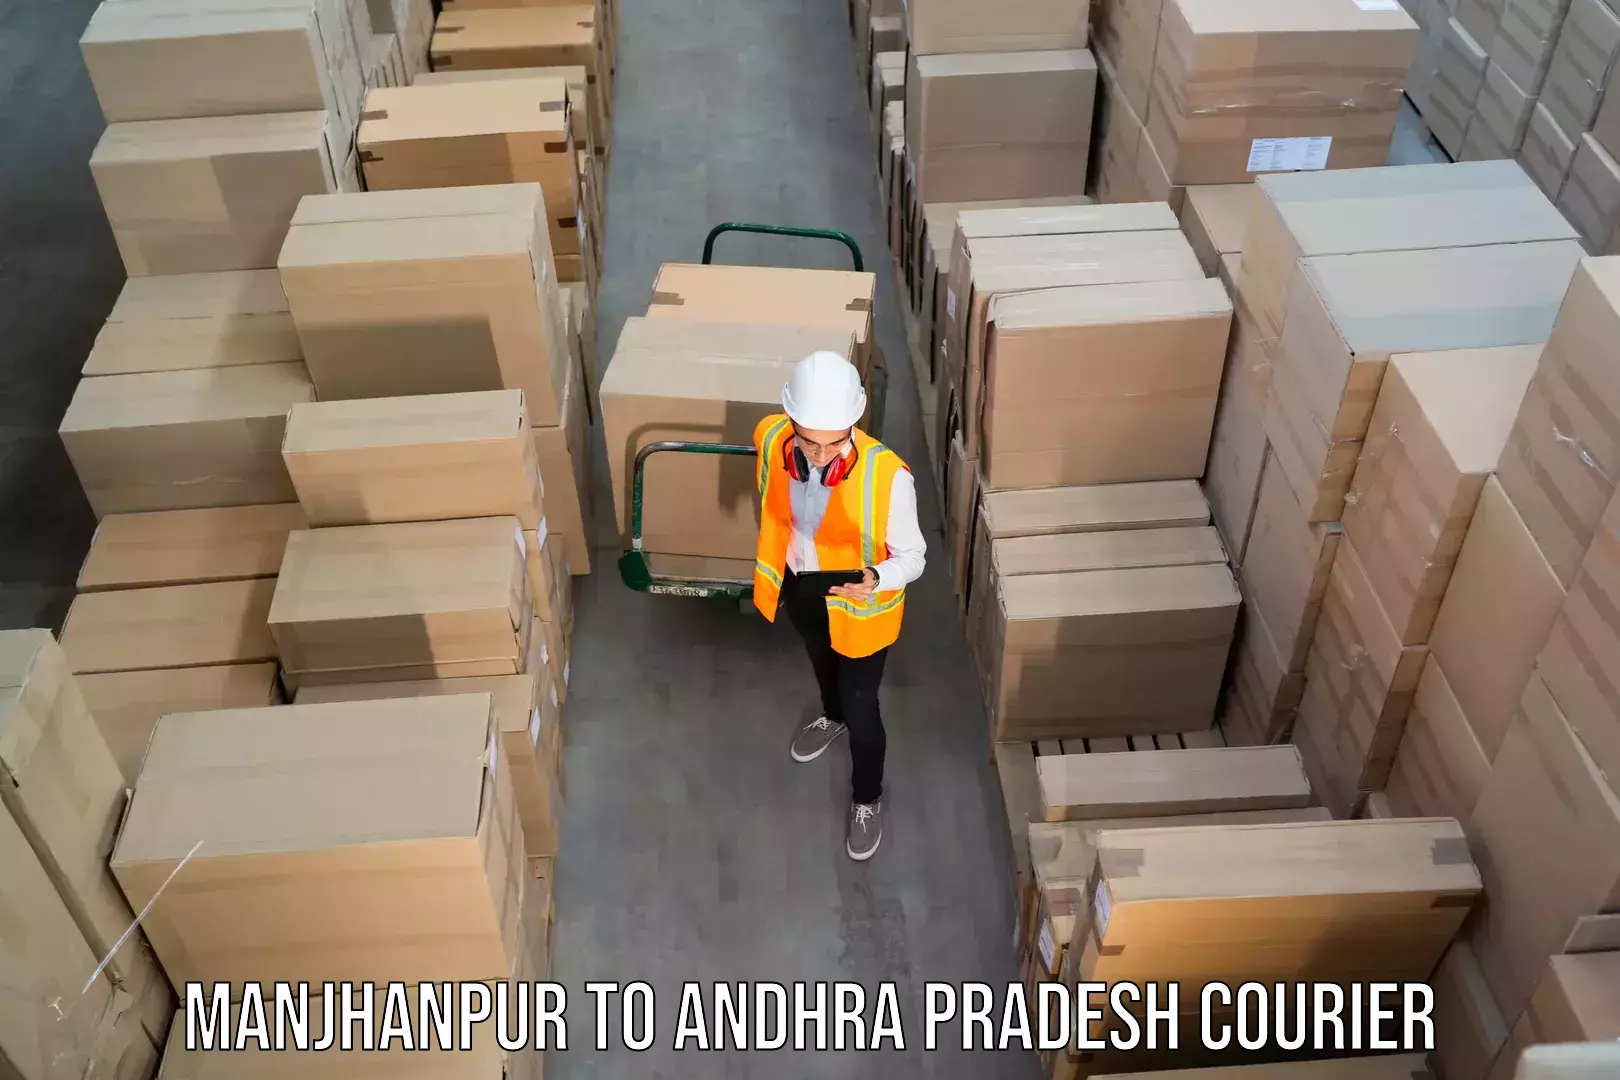 Courier service comparison Manjhanpur to Andhra Pradesh